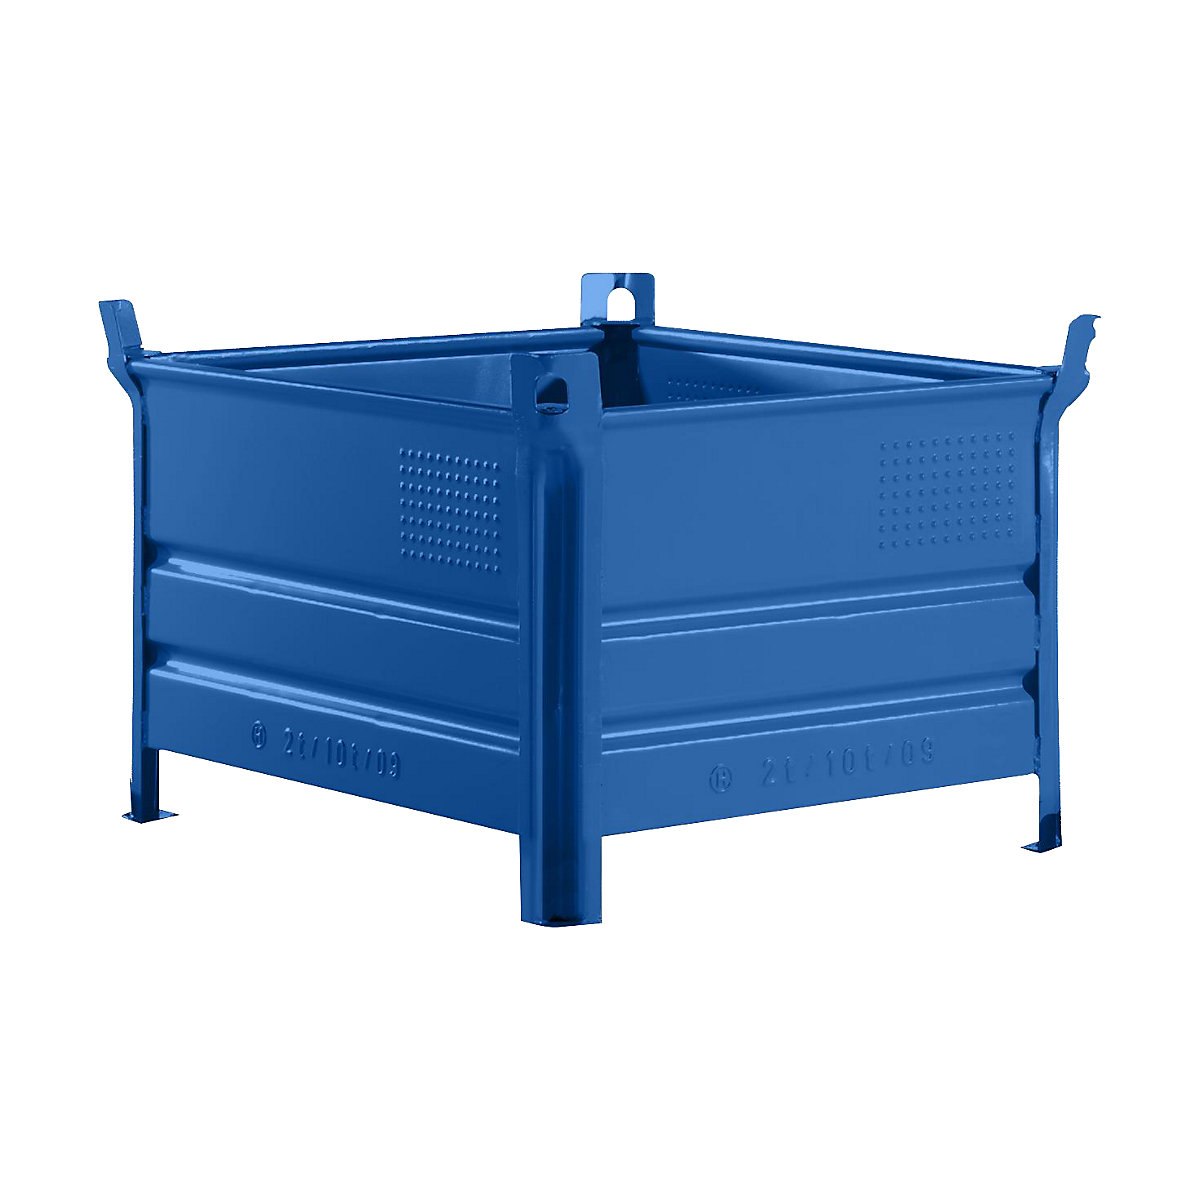 Vollwand-Stapelbehälter Heson, BxL 800 x 1000 mm, Traglast 1000 kg, blau, ab 5 Stk-8